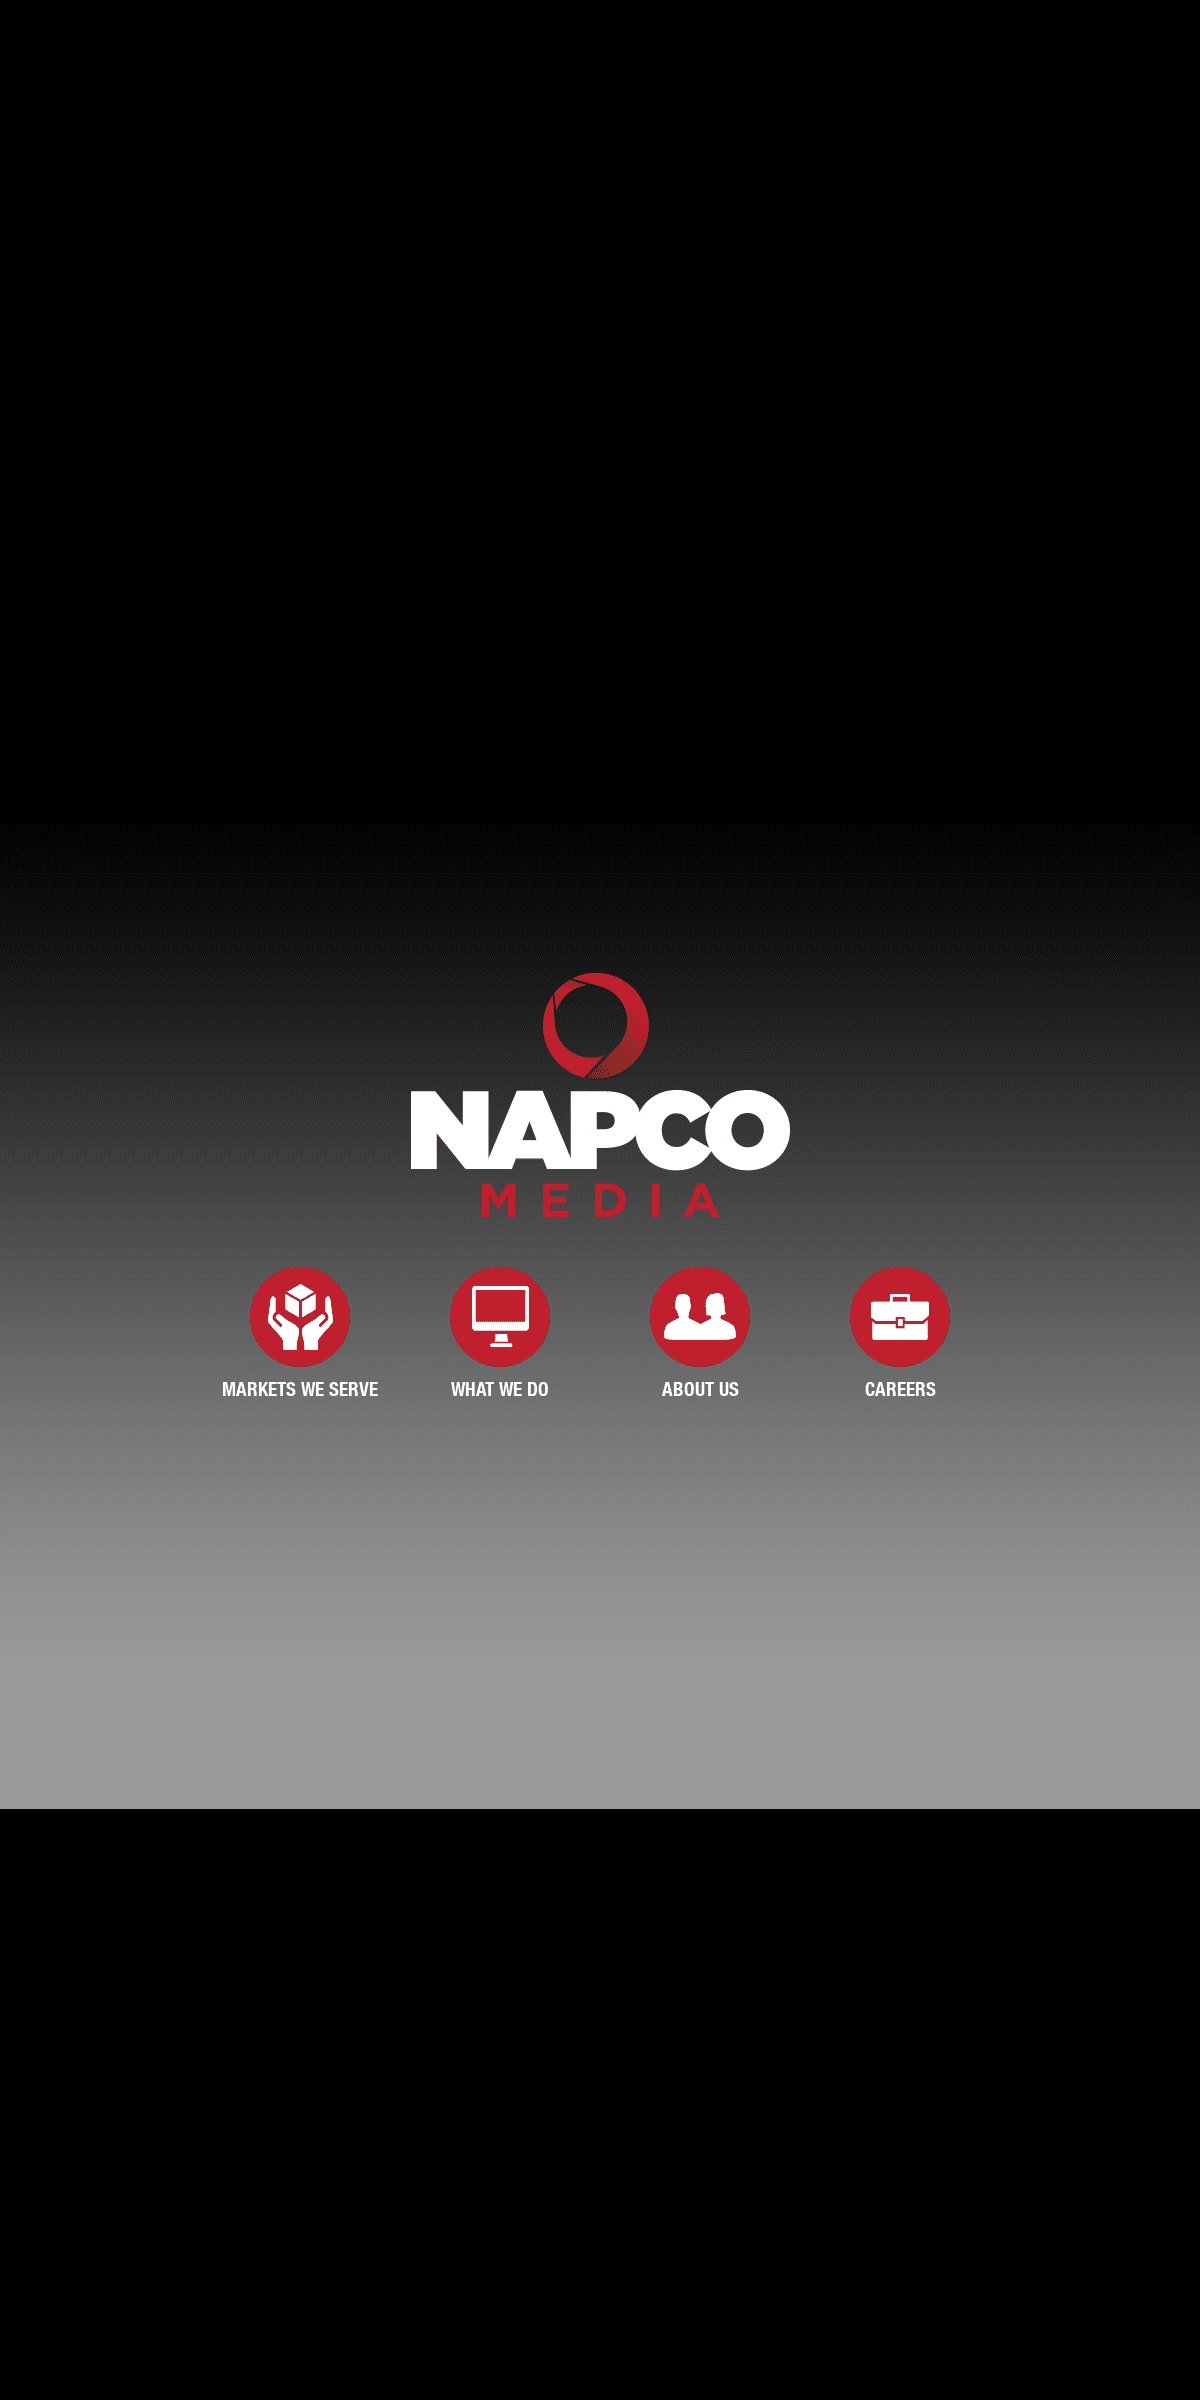 A complete backup of napco.com